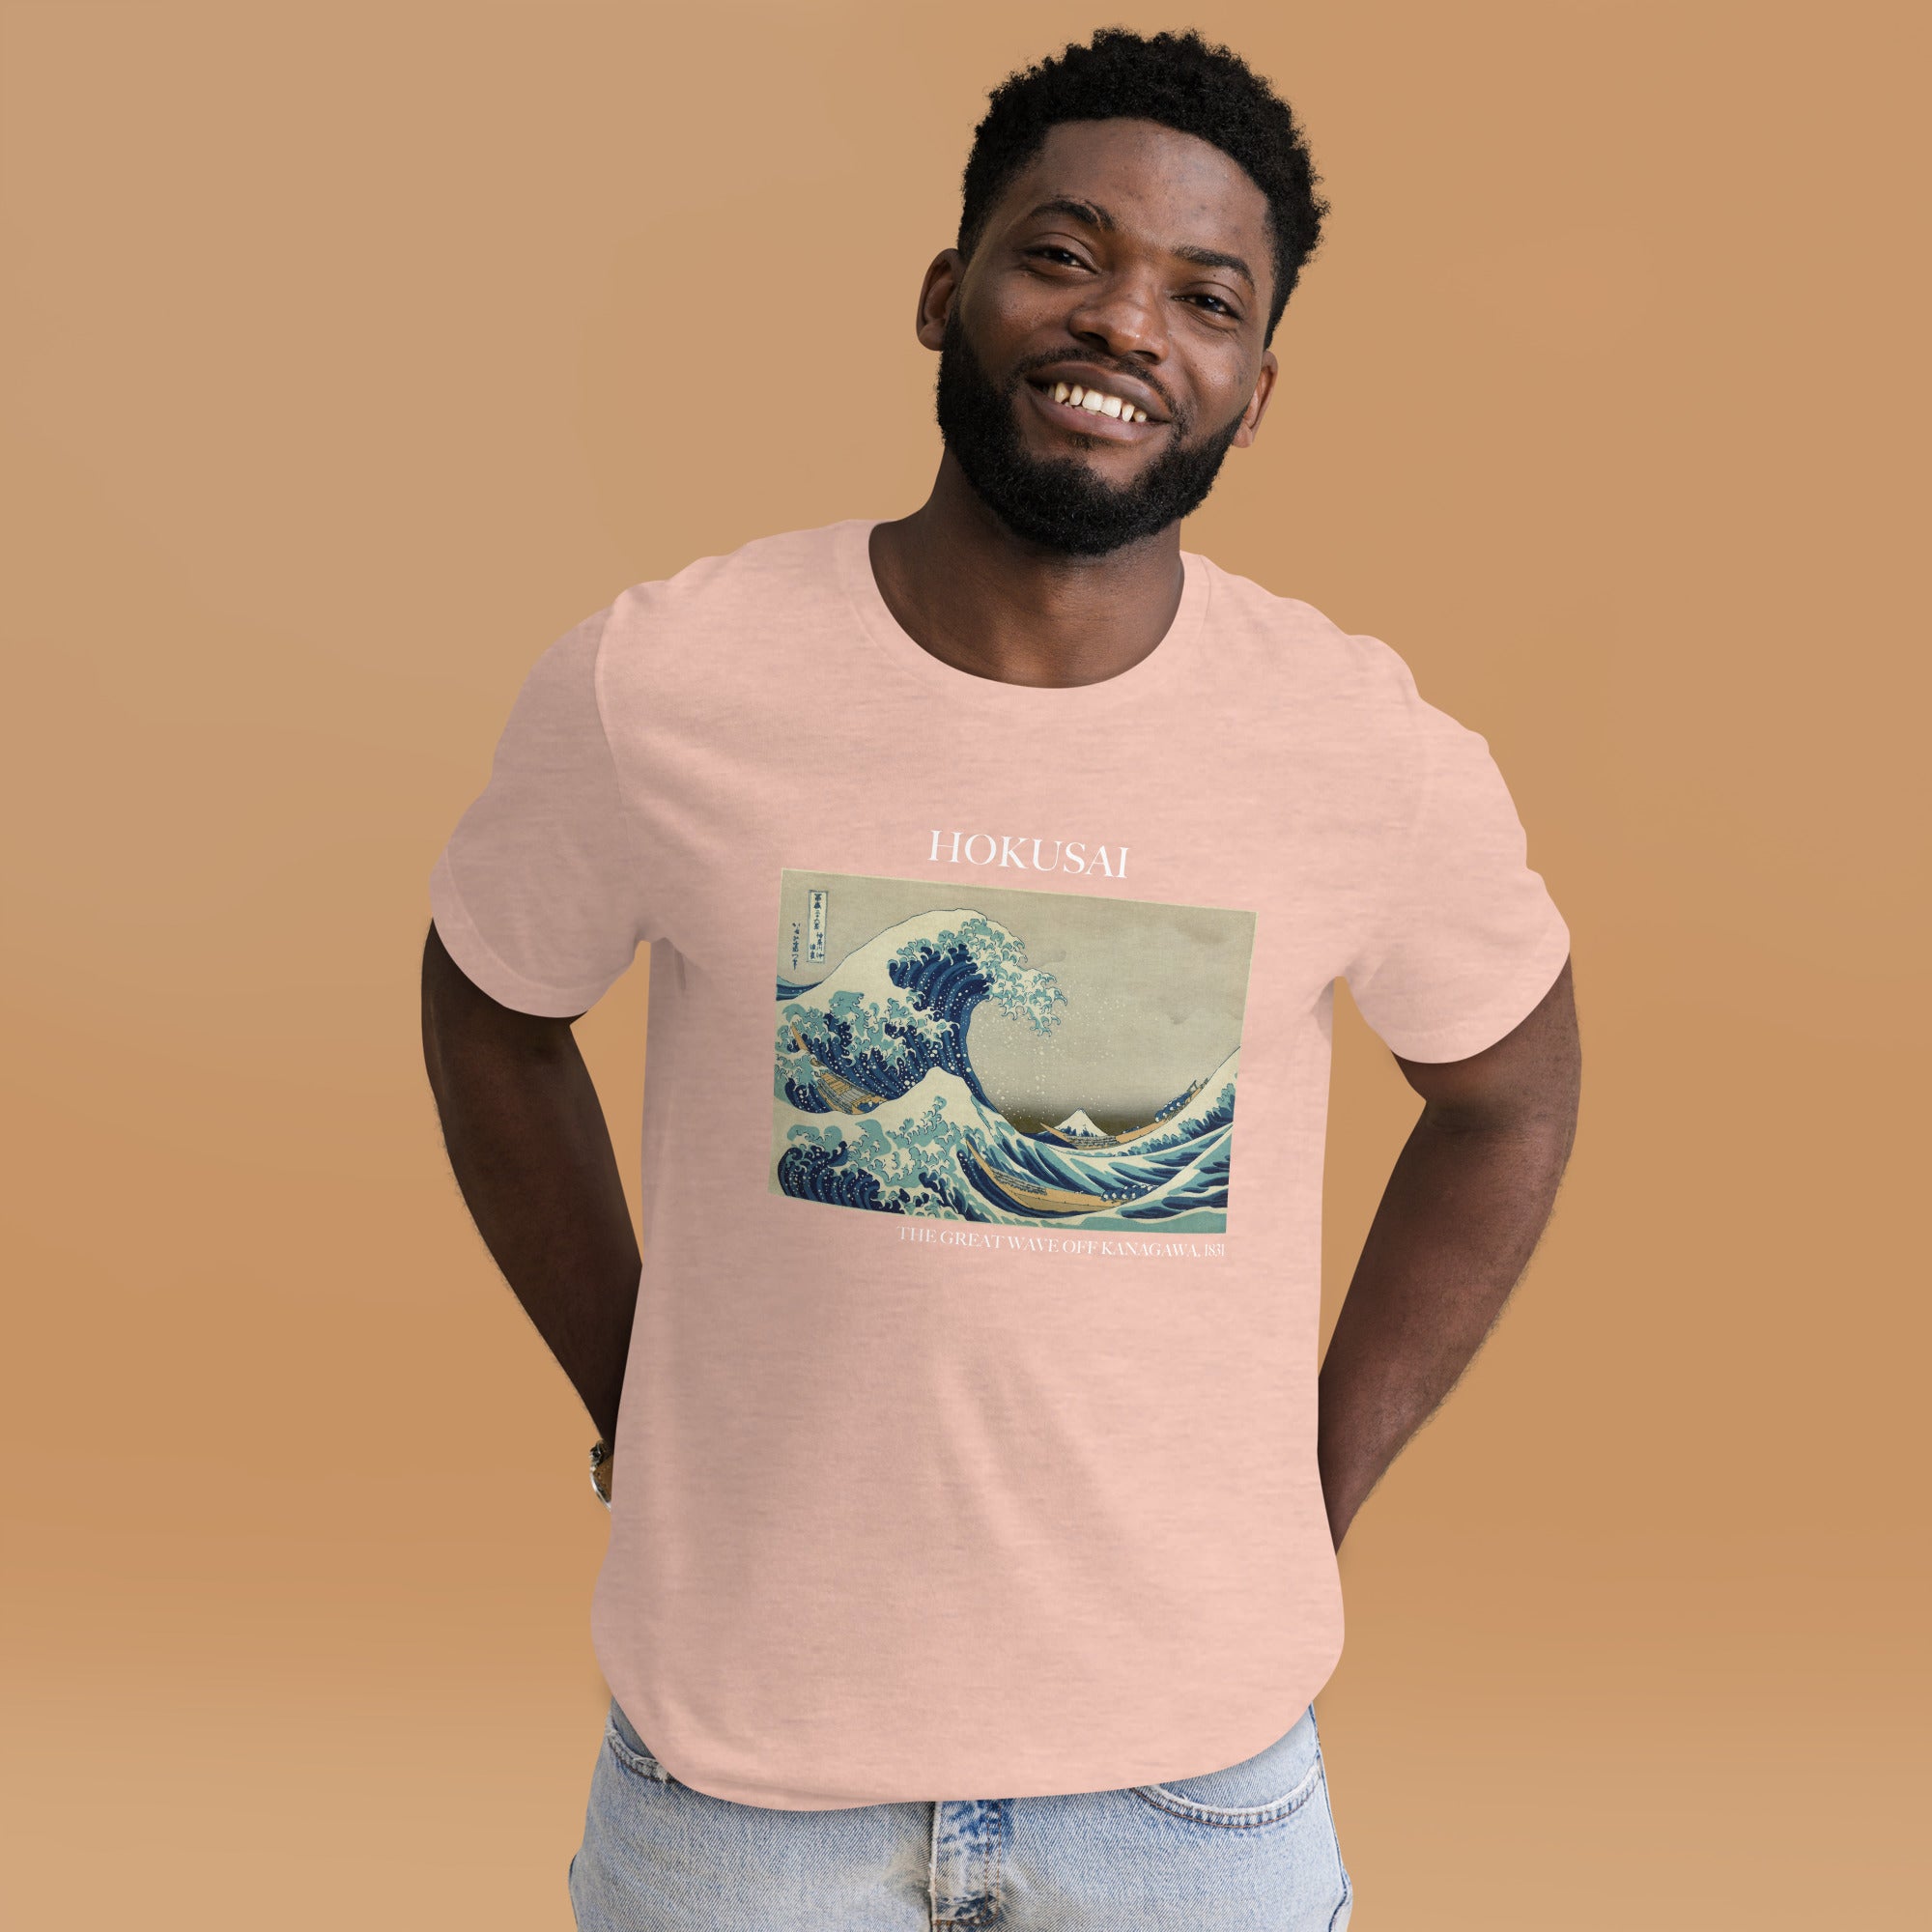 Hokusai 'The Great Wave off Kanagawa' Famous Painting T-Shirt | Unisex Classic Art Tee